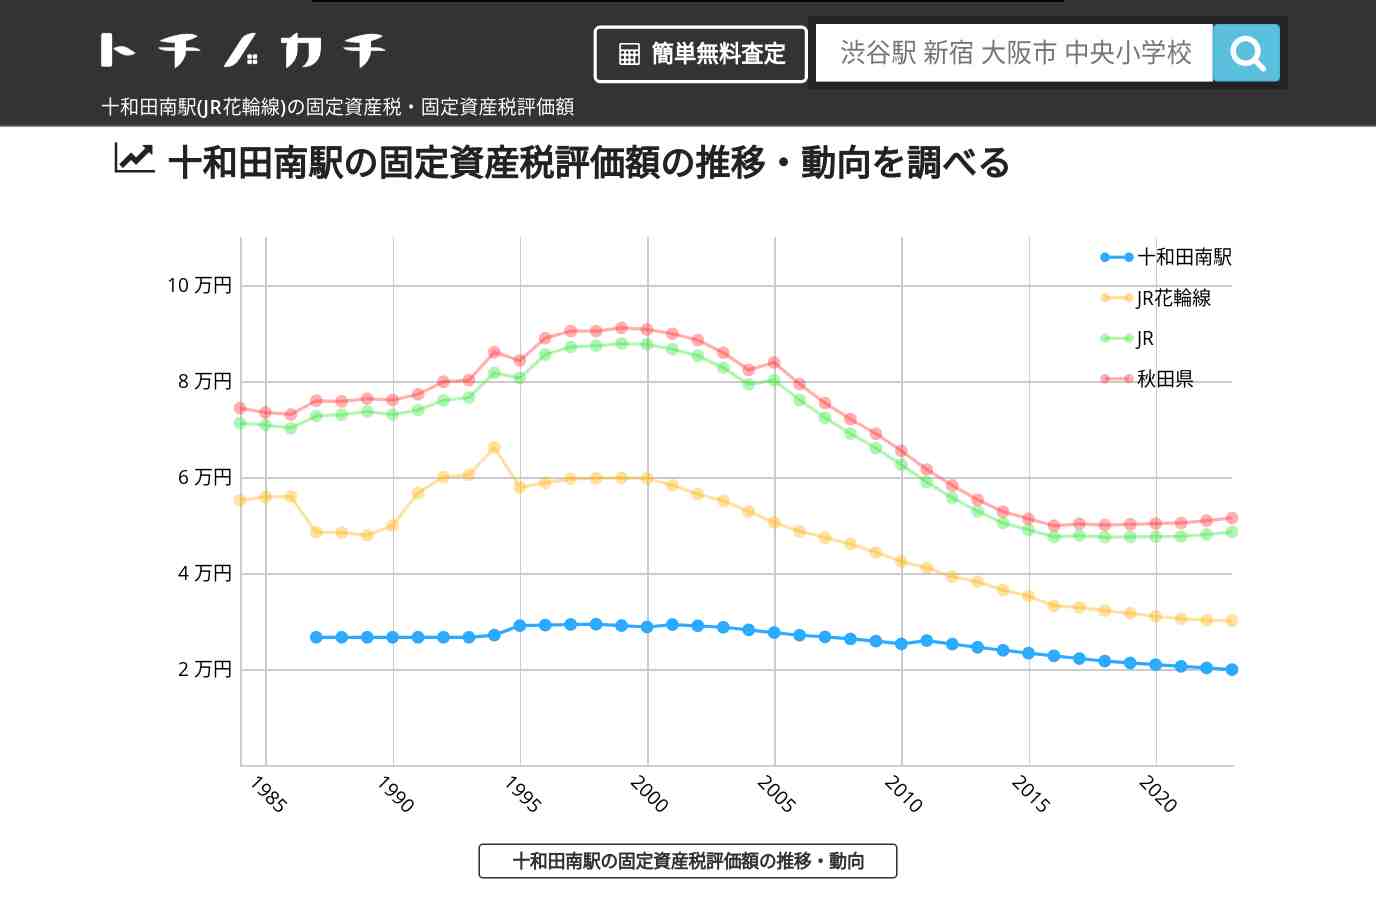 十和田南駅(JR花輪線)の固定資産税・固定資産税評価額 | トチノカチ